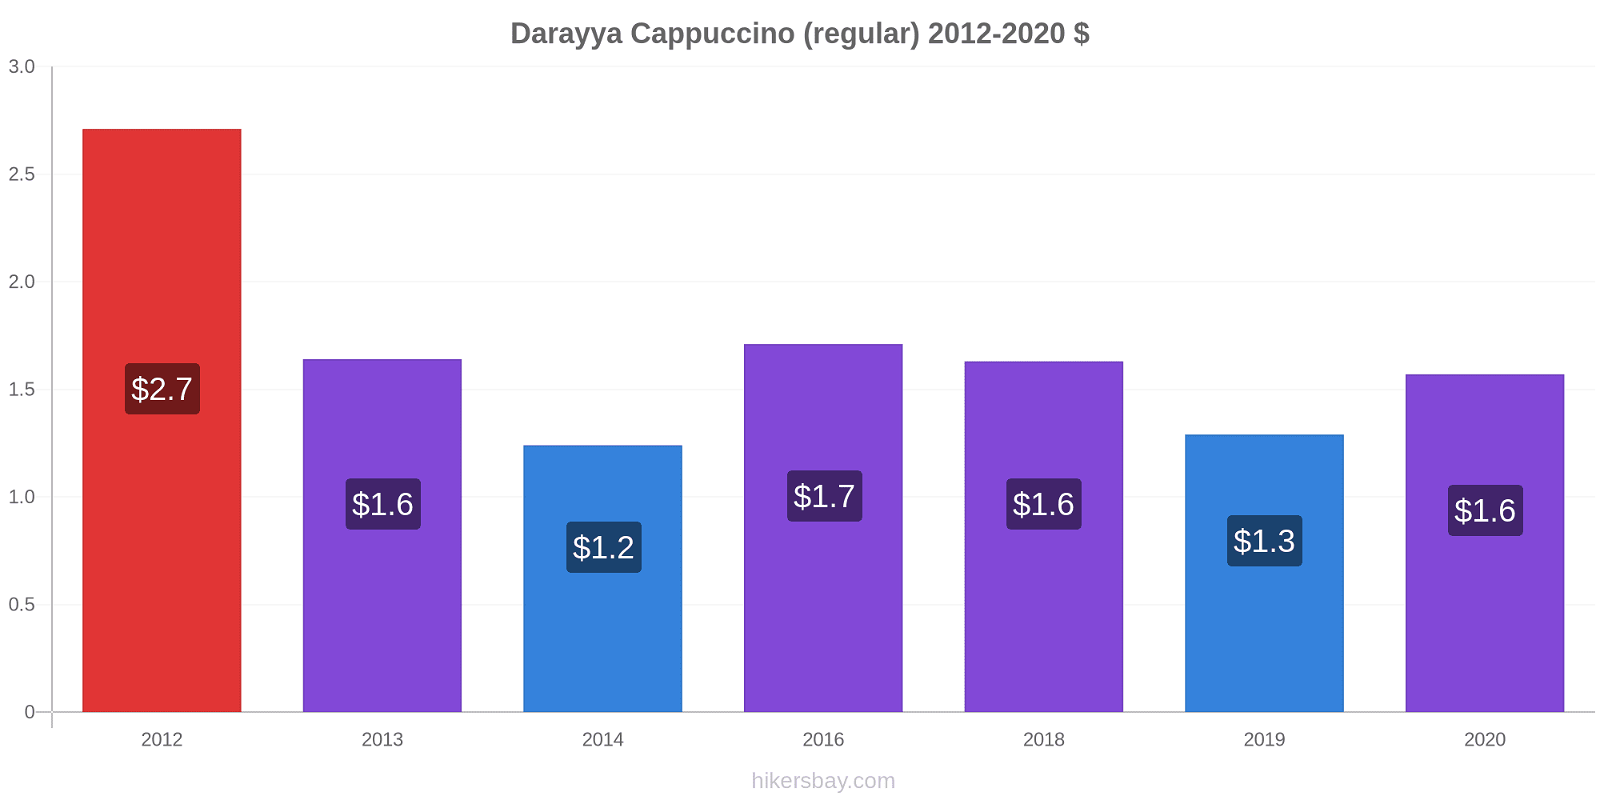 Darayya price changes Cappuccino (regular) hikersbay.com